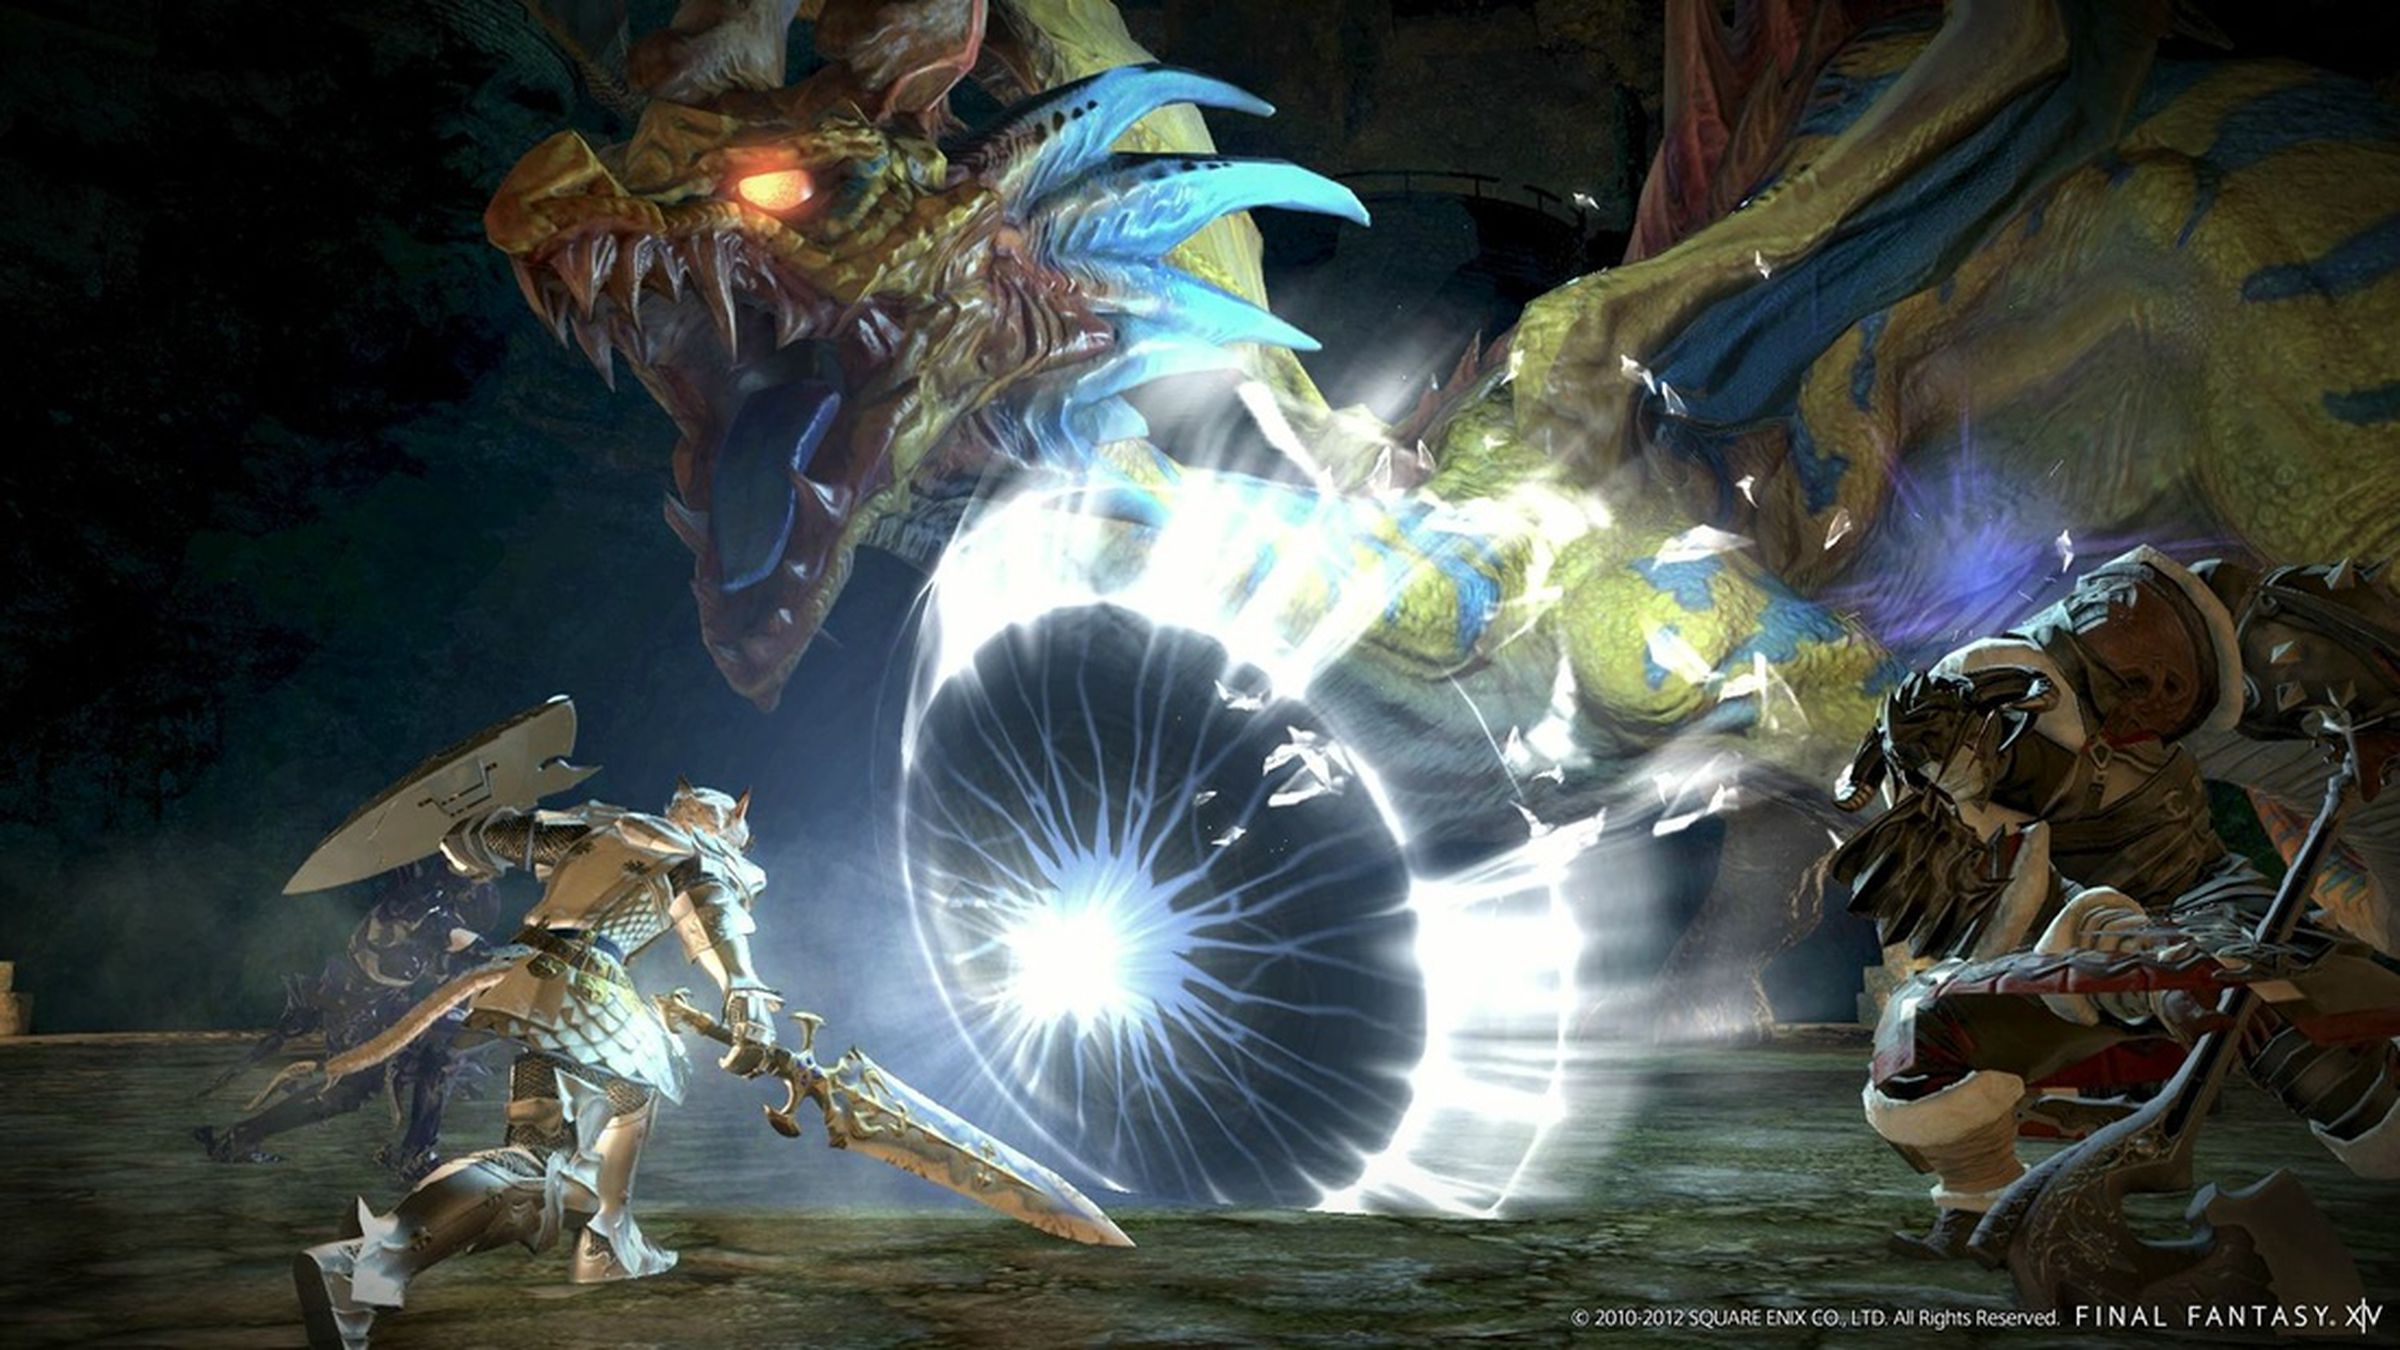 Gallery: 'Final Fantasy XIV: A Realm Reborn' PAX Prime 2012 screenshots, artwork